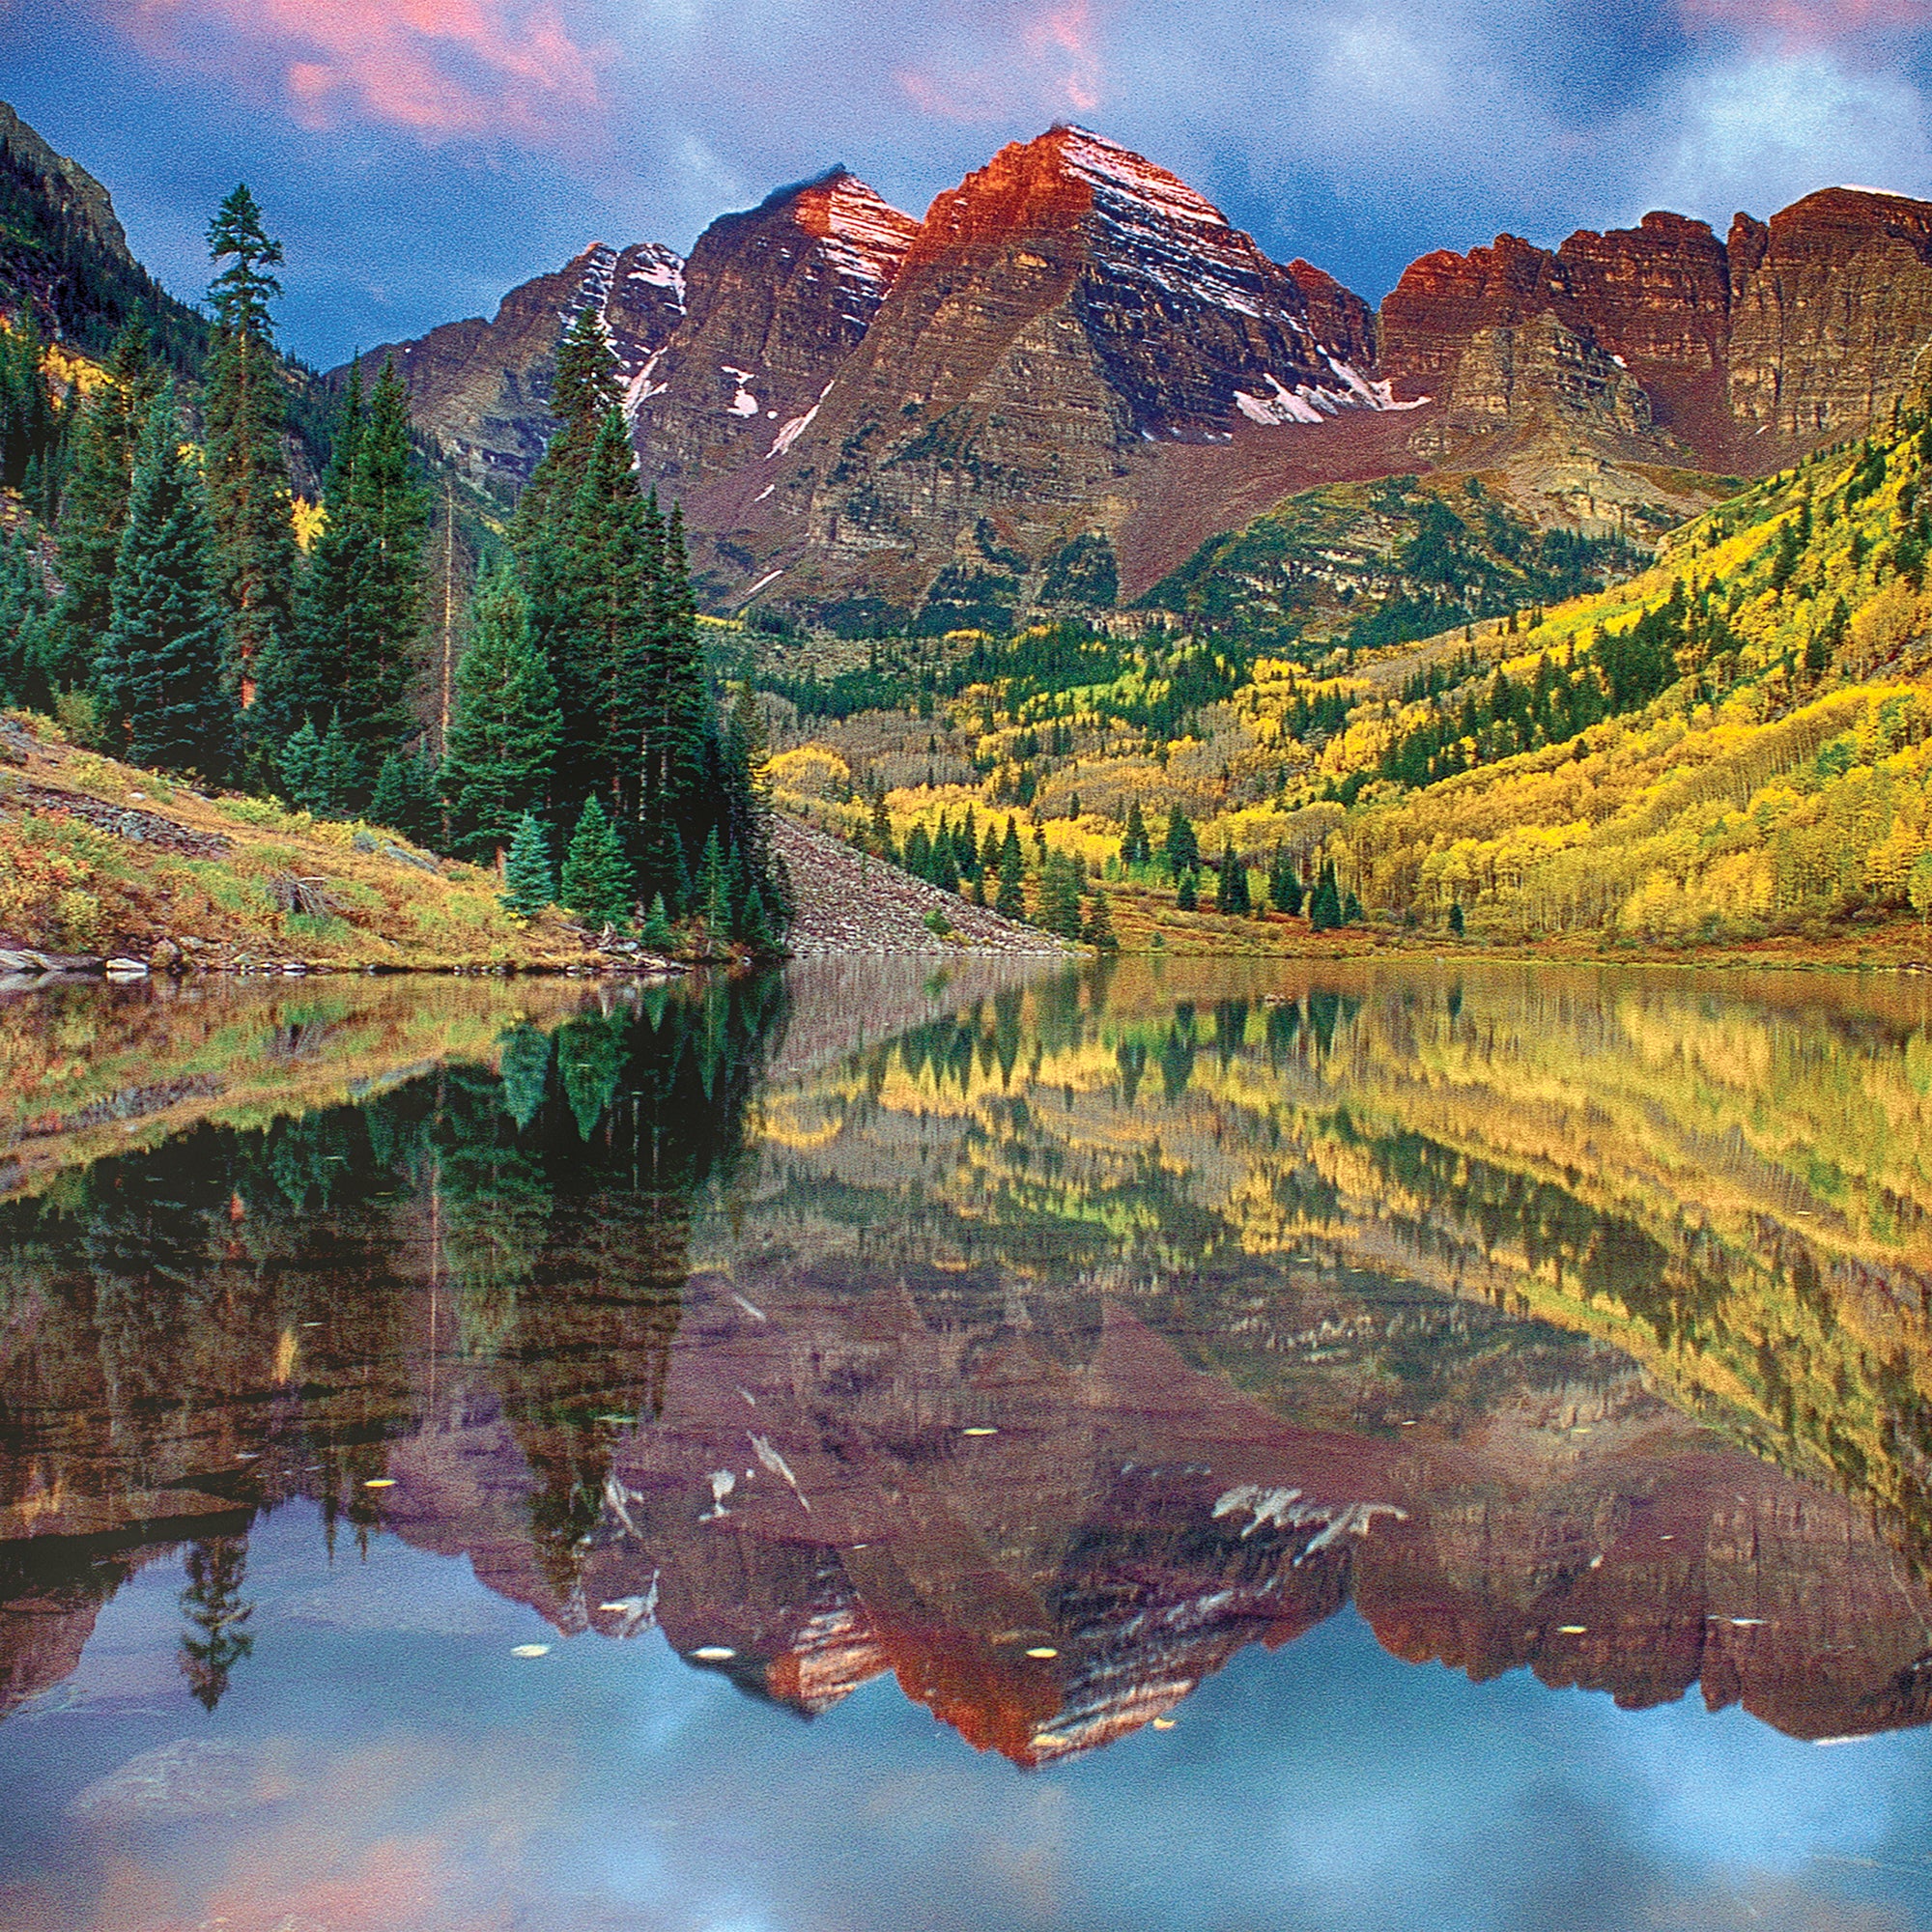 Maroon Bells Photograhy | Autumn Reflection Maroon Bells-Aspen Colorado |Robert Castellino Photography